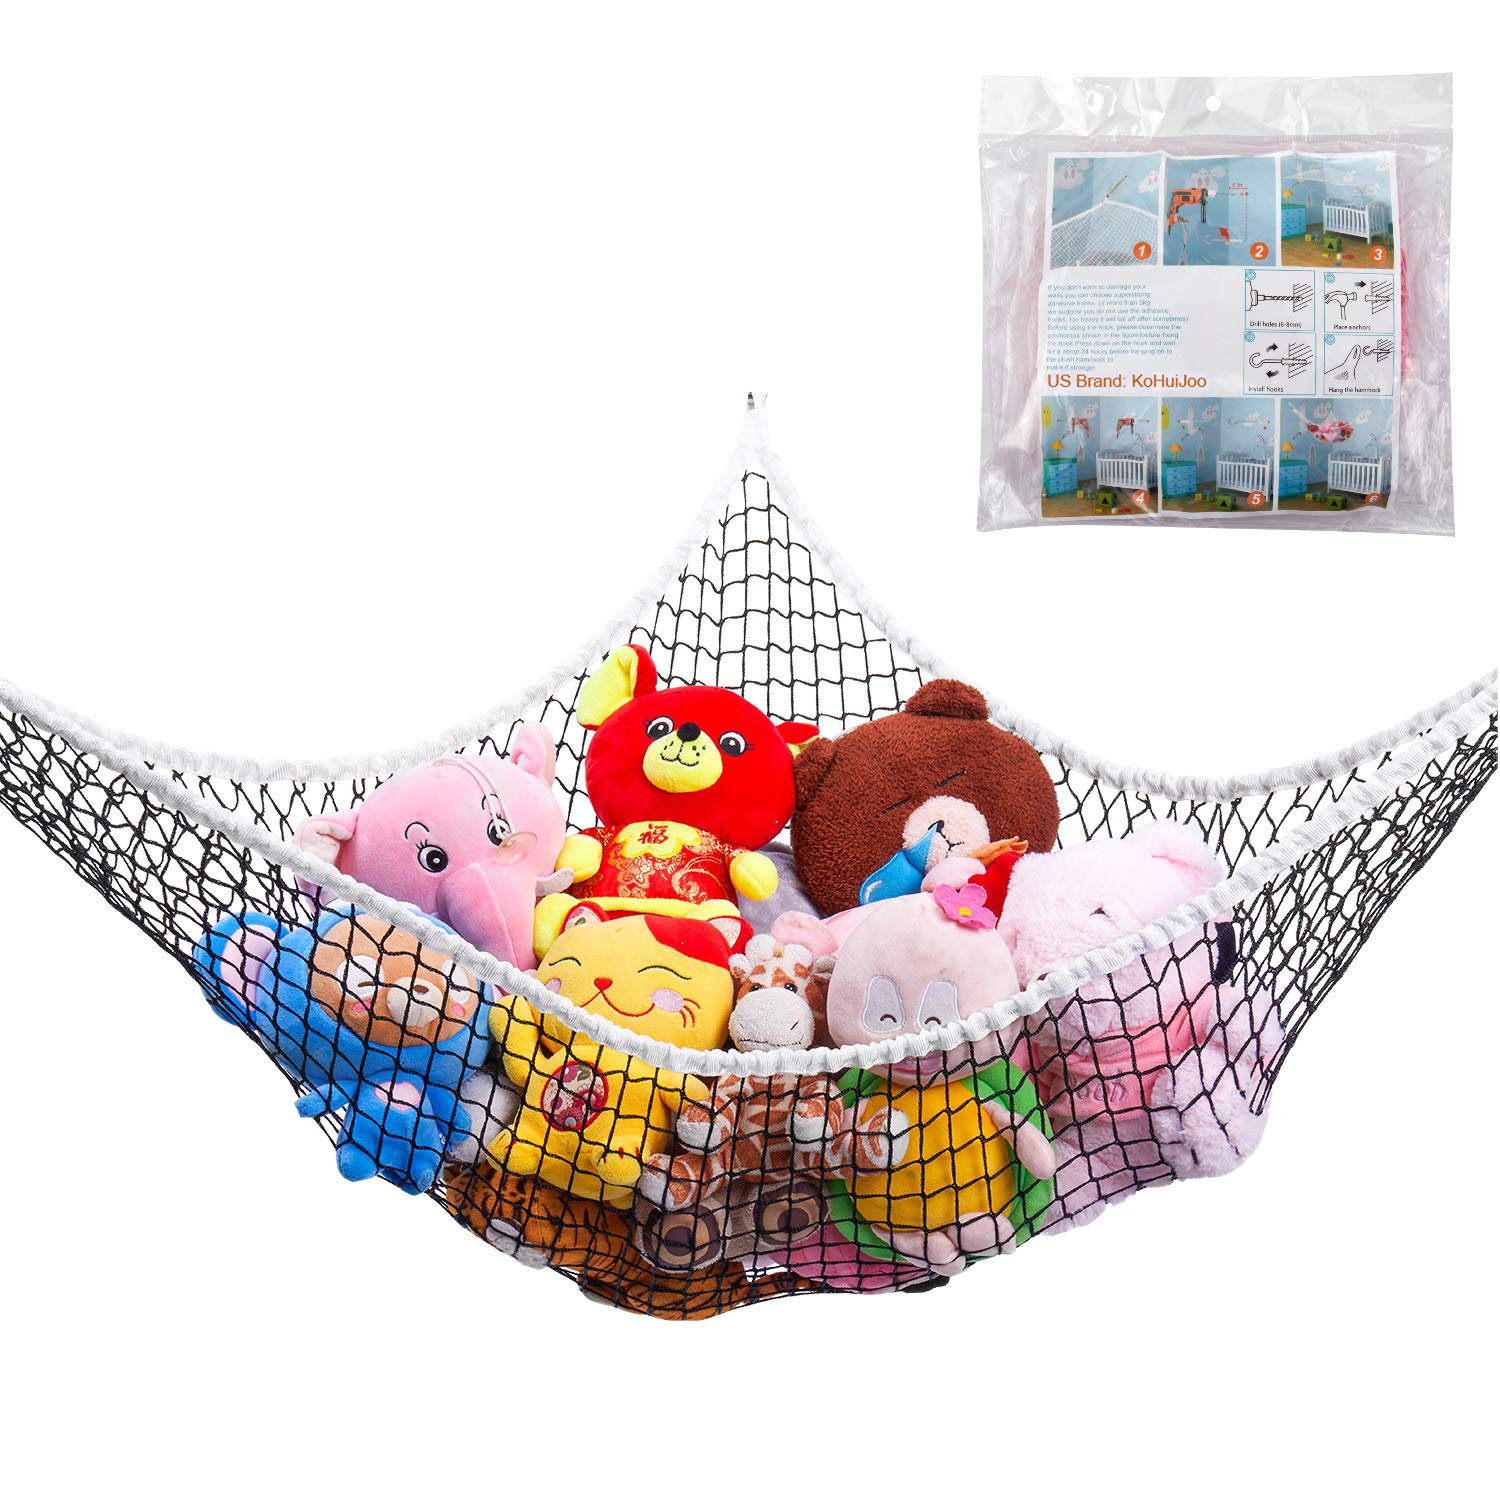 Generic Toy Hammock for Stuffed Animals, KoHuiJoo Stuffed Animal Hammock Net  Jumbo Plush Toy Storage Cornet Net 70